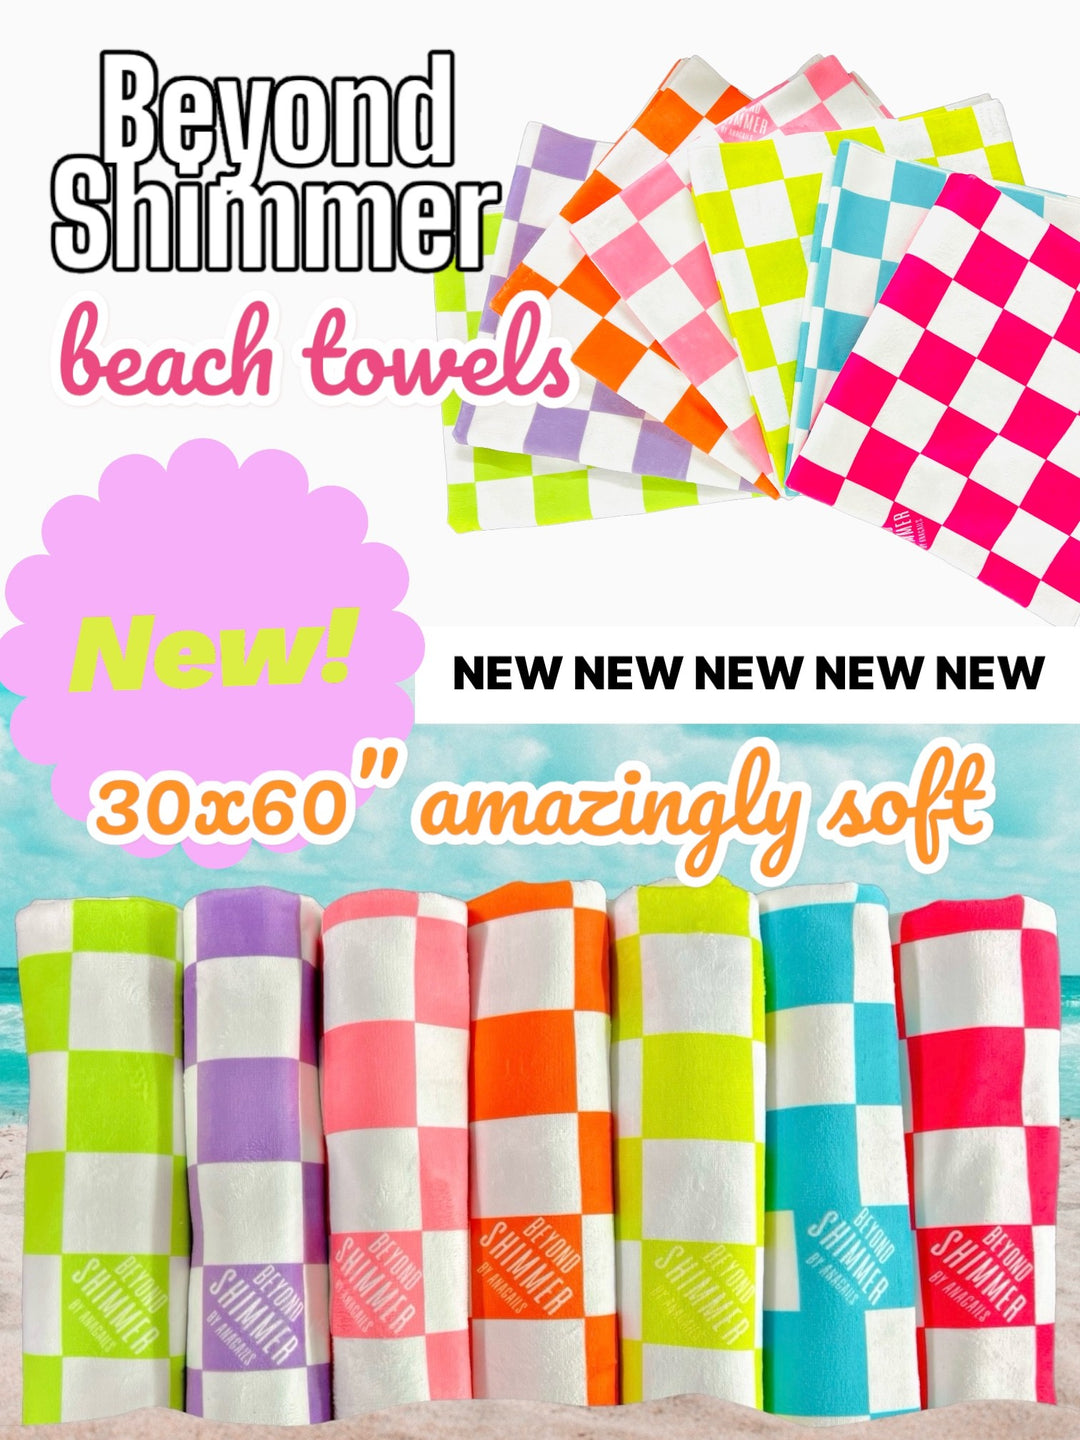 Pink Stars Beach Towel